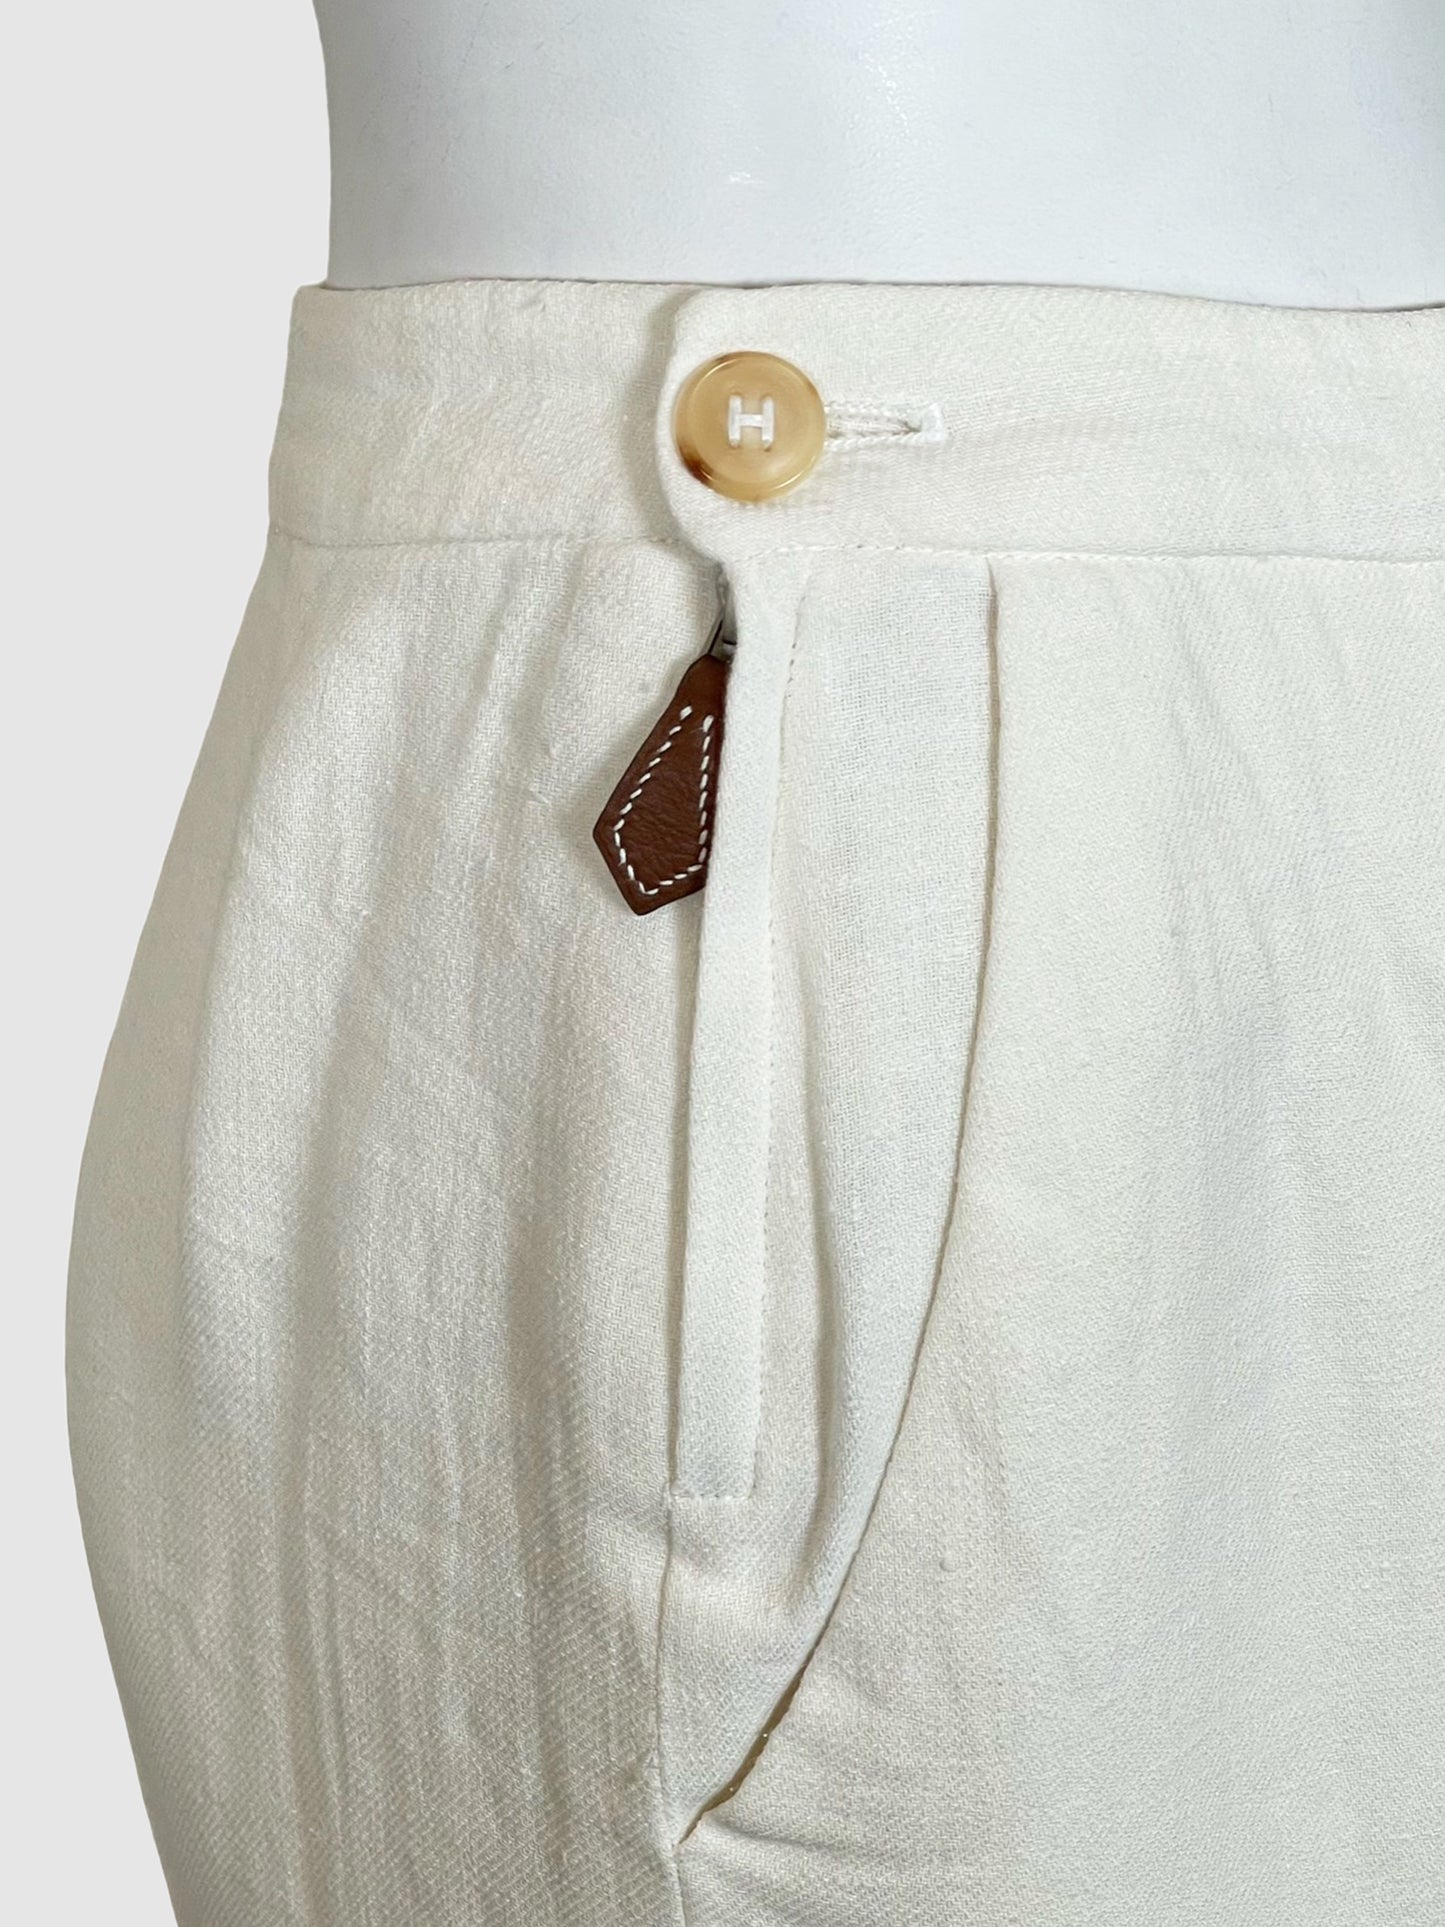 Hermès Linen Trousers - Size 40